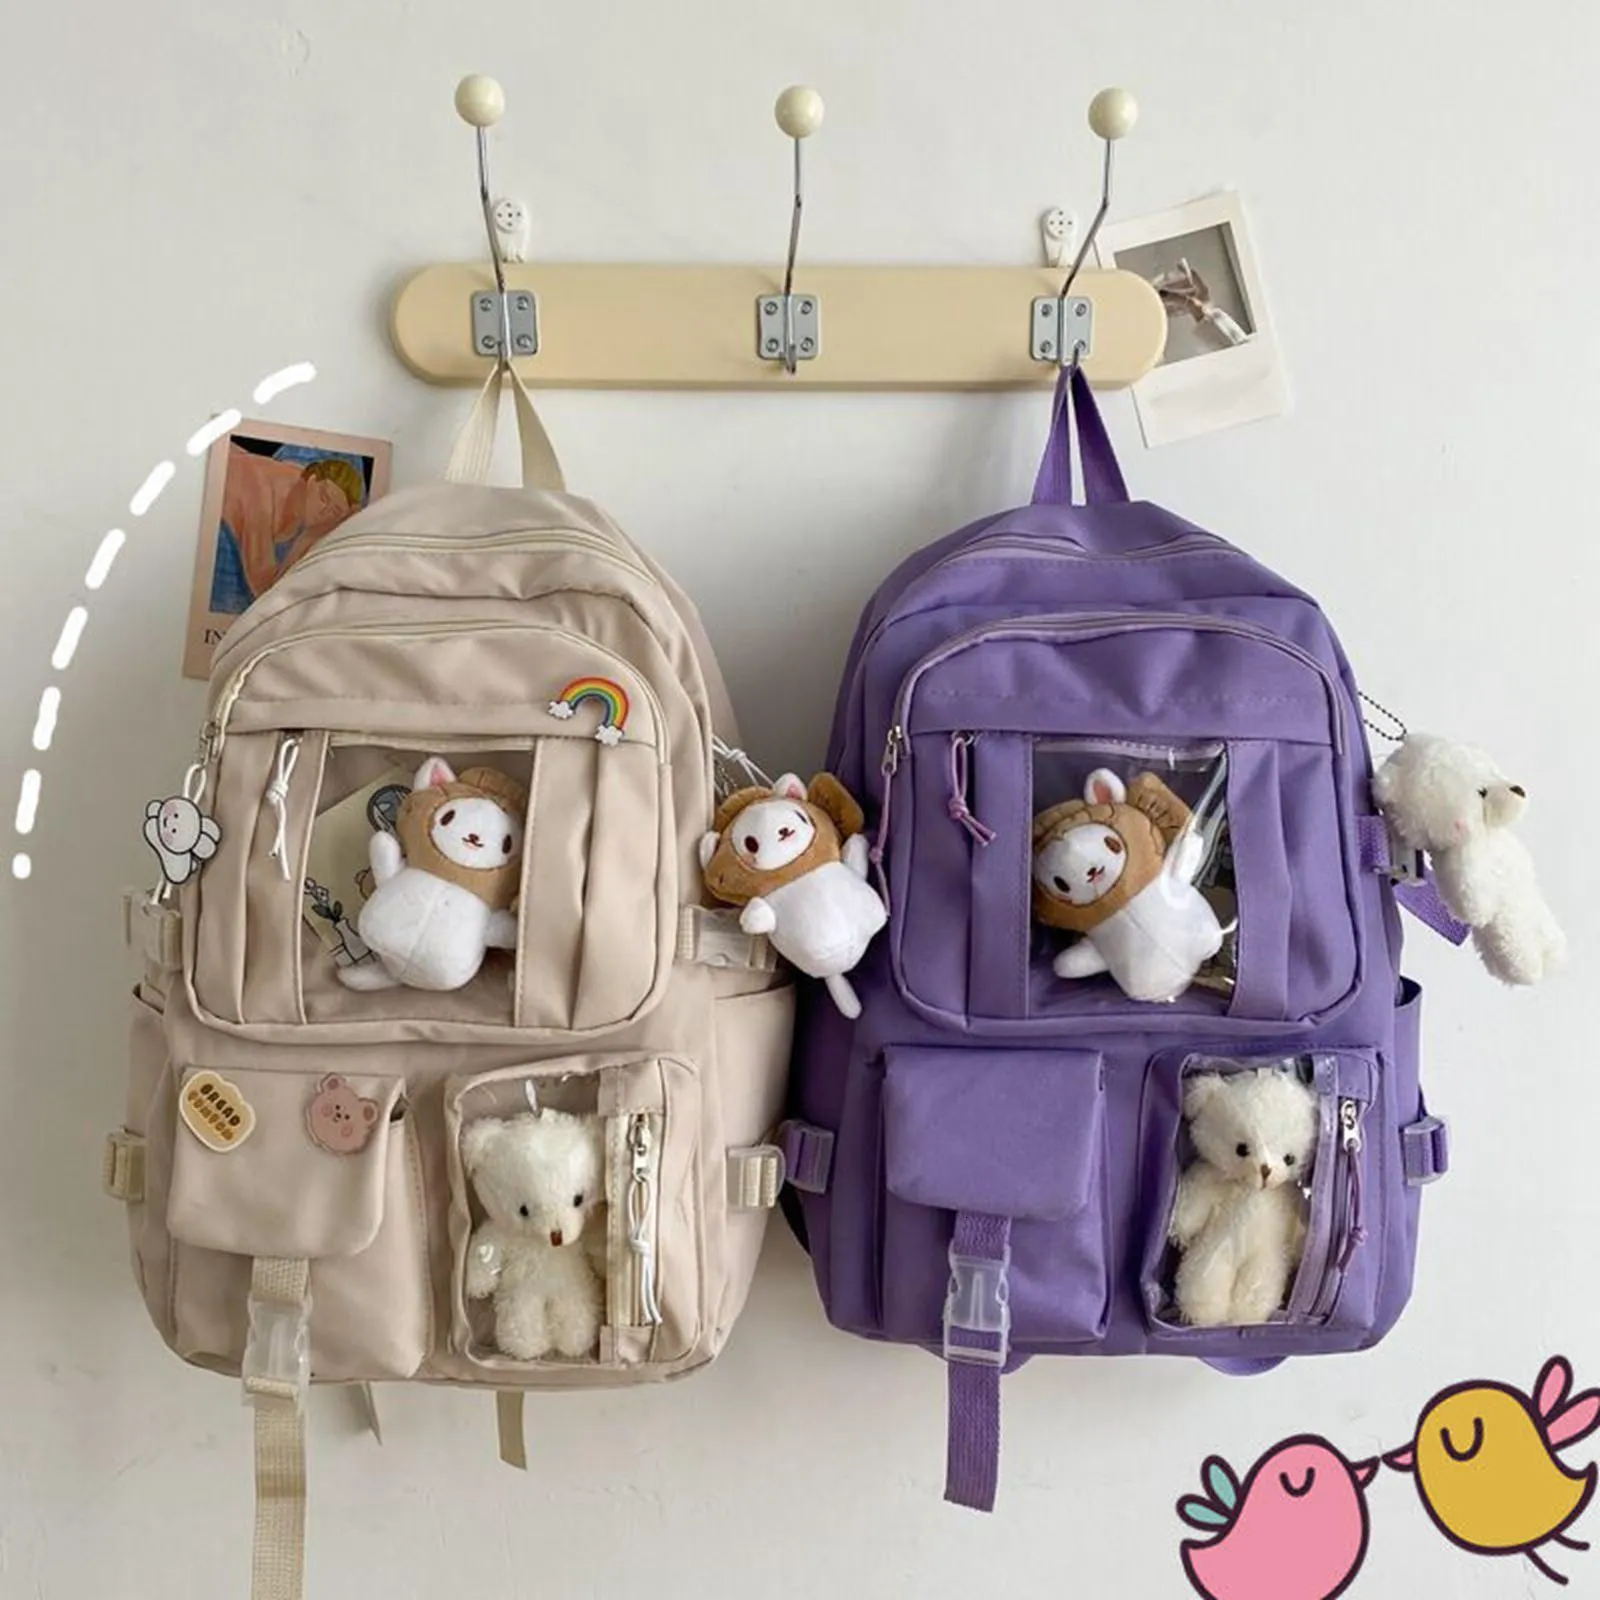 Backpack for Aesthetic Adjustable Straps School Bag Bookbag Laptop Backpack for Elementary School Kids Teen College